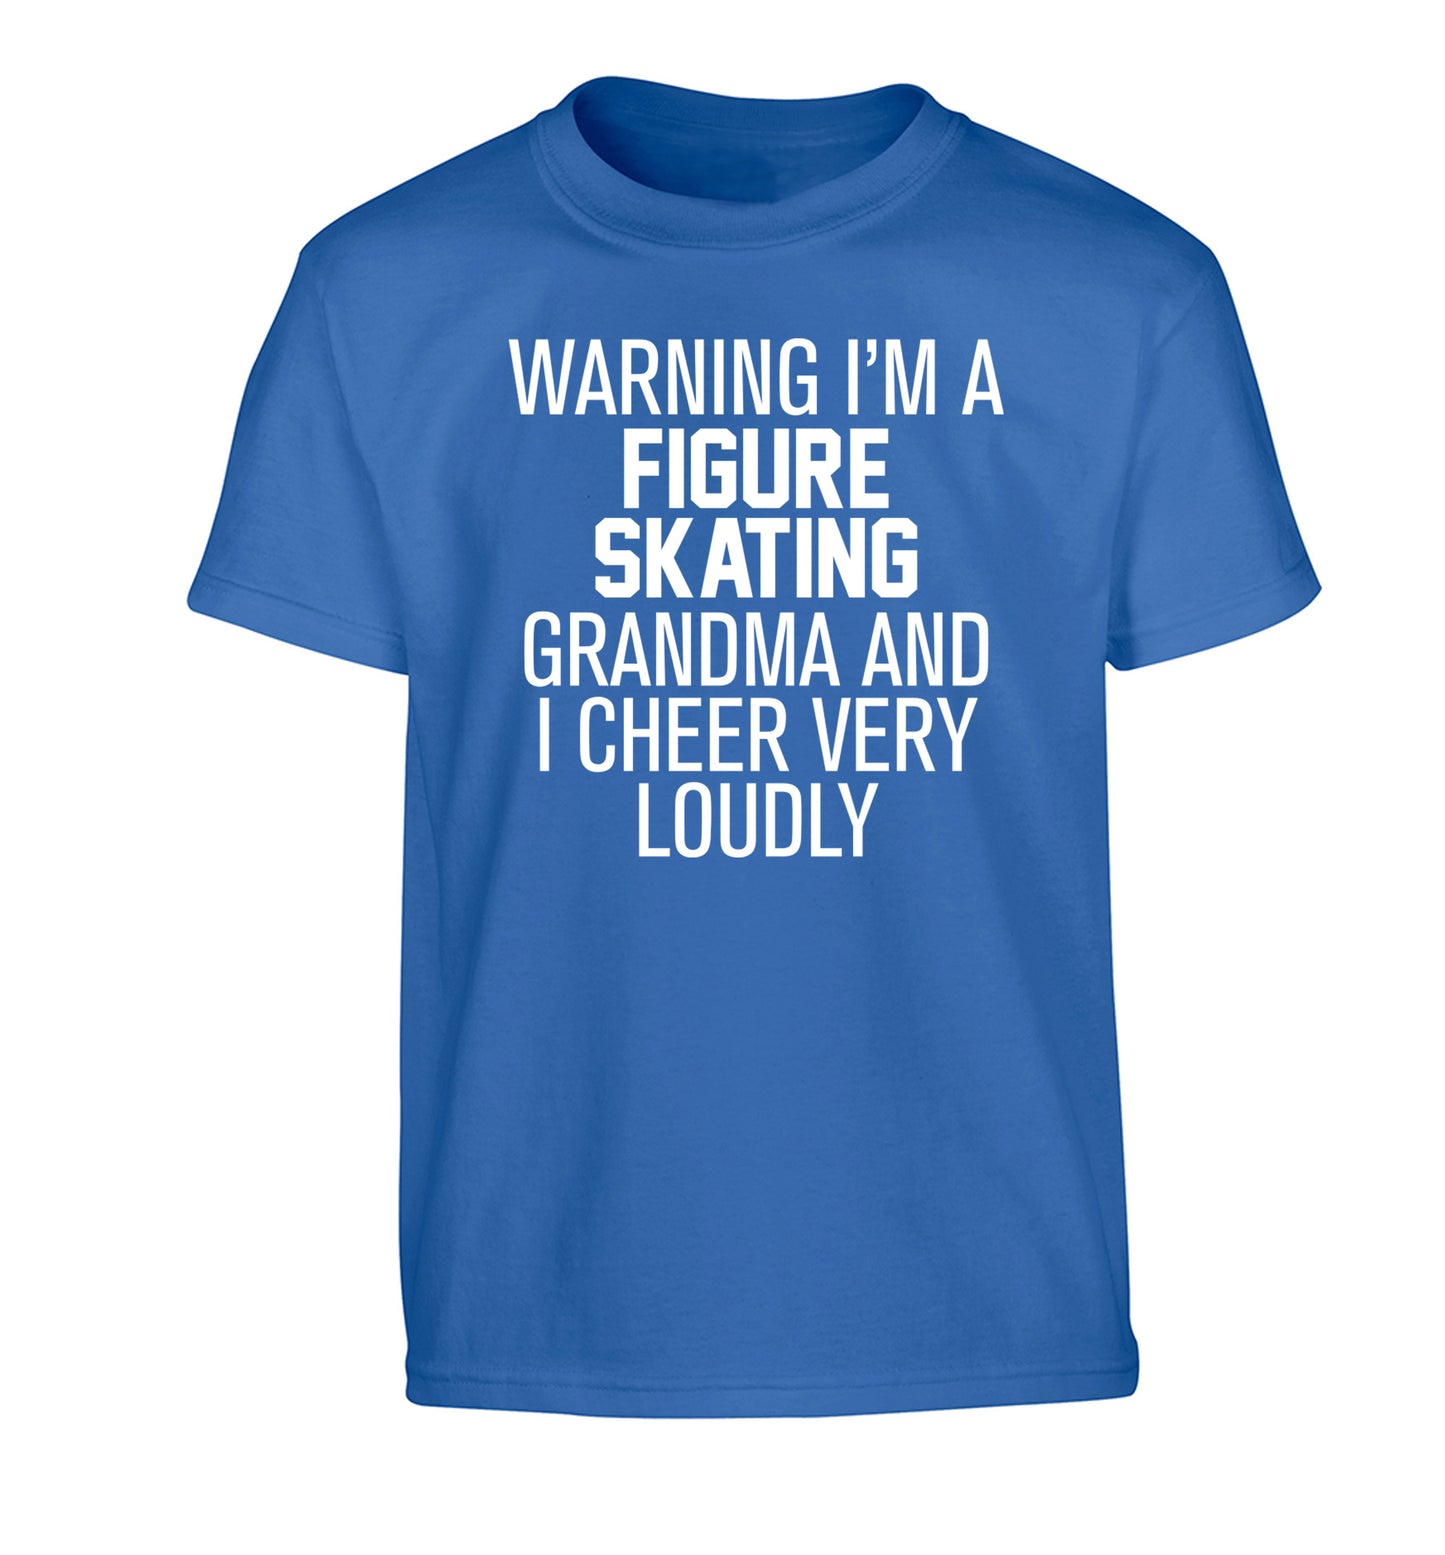 Warning I'm a figure skating grandma and I cheer very loudly Children's blue Tshirt 12-14 Years